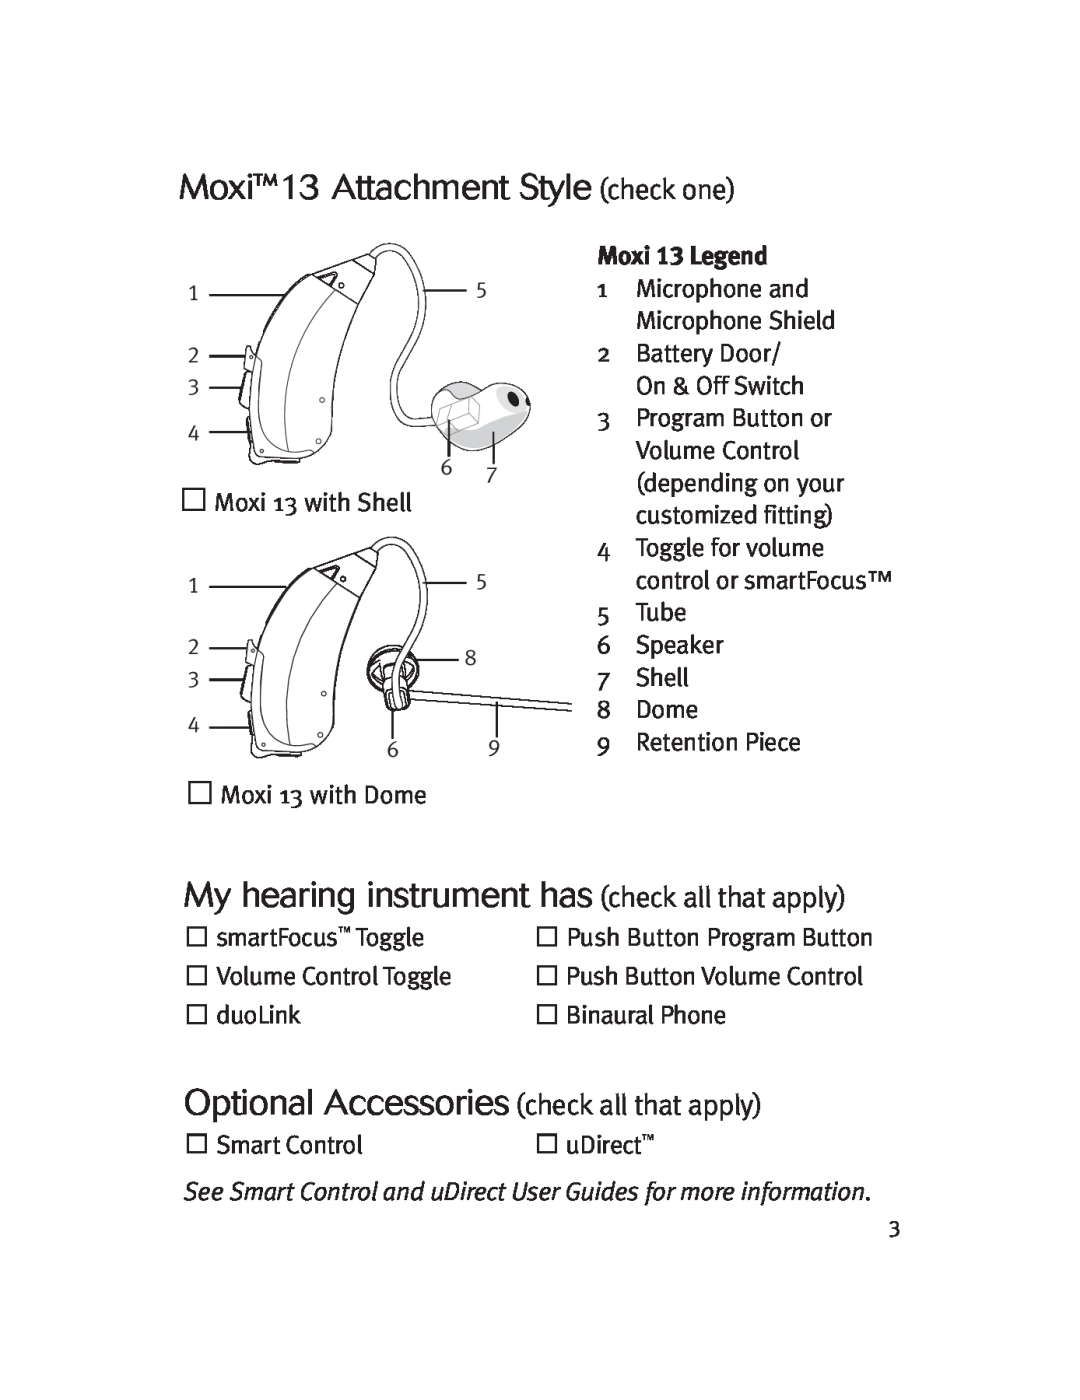 Unitron Hearing Aid Moda 13, Moxi 13 Moxi13 Attachment Style check one, My hearing instrument has check all that apply 